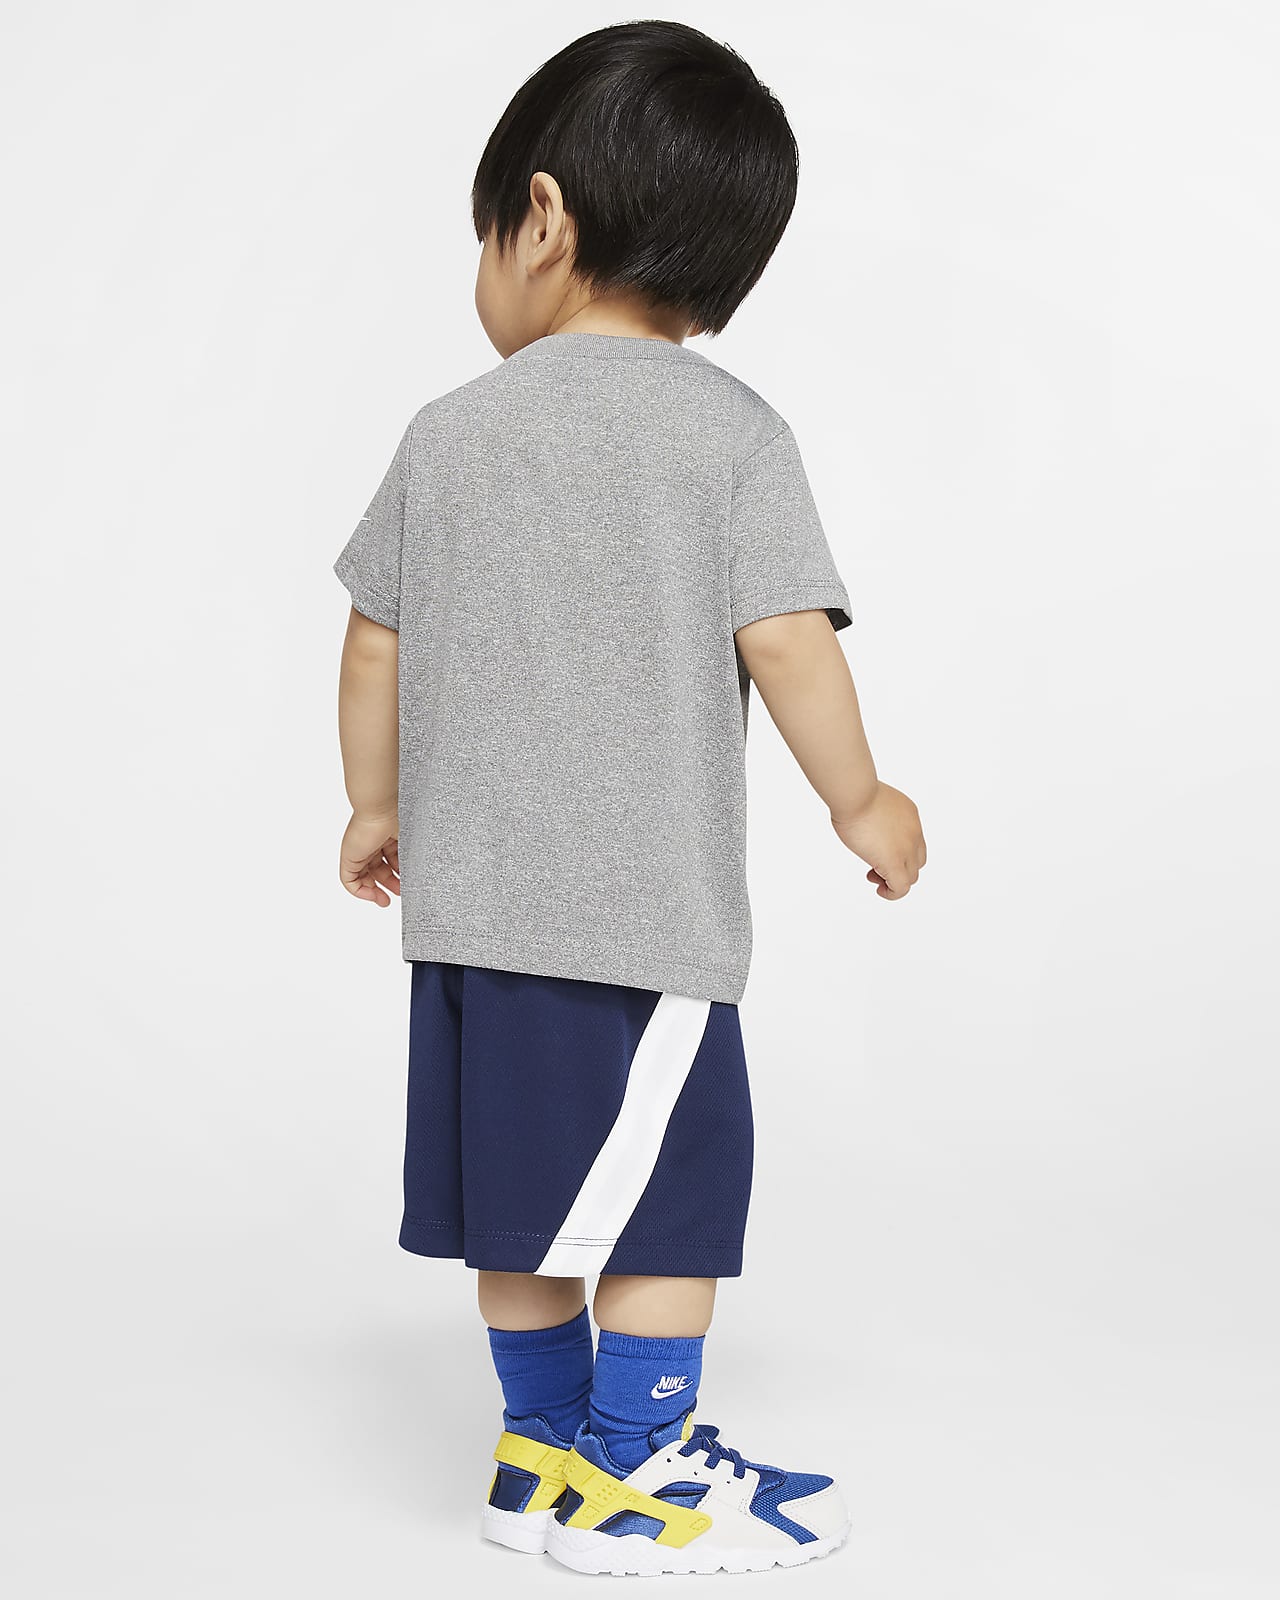 Nike Dri-FIT Baby (12-24M) T-Shirt and Shorts Set.